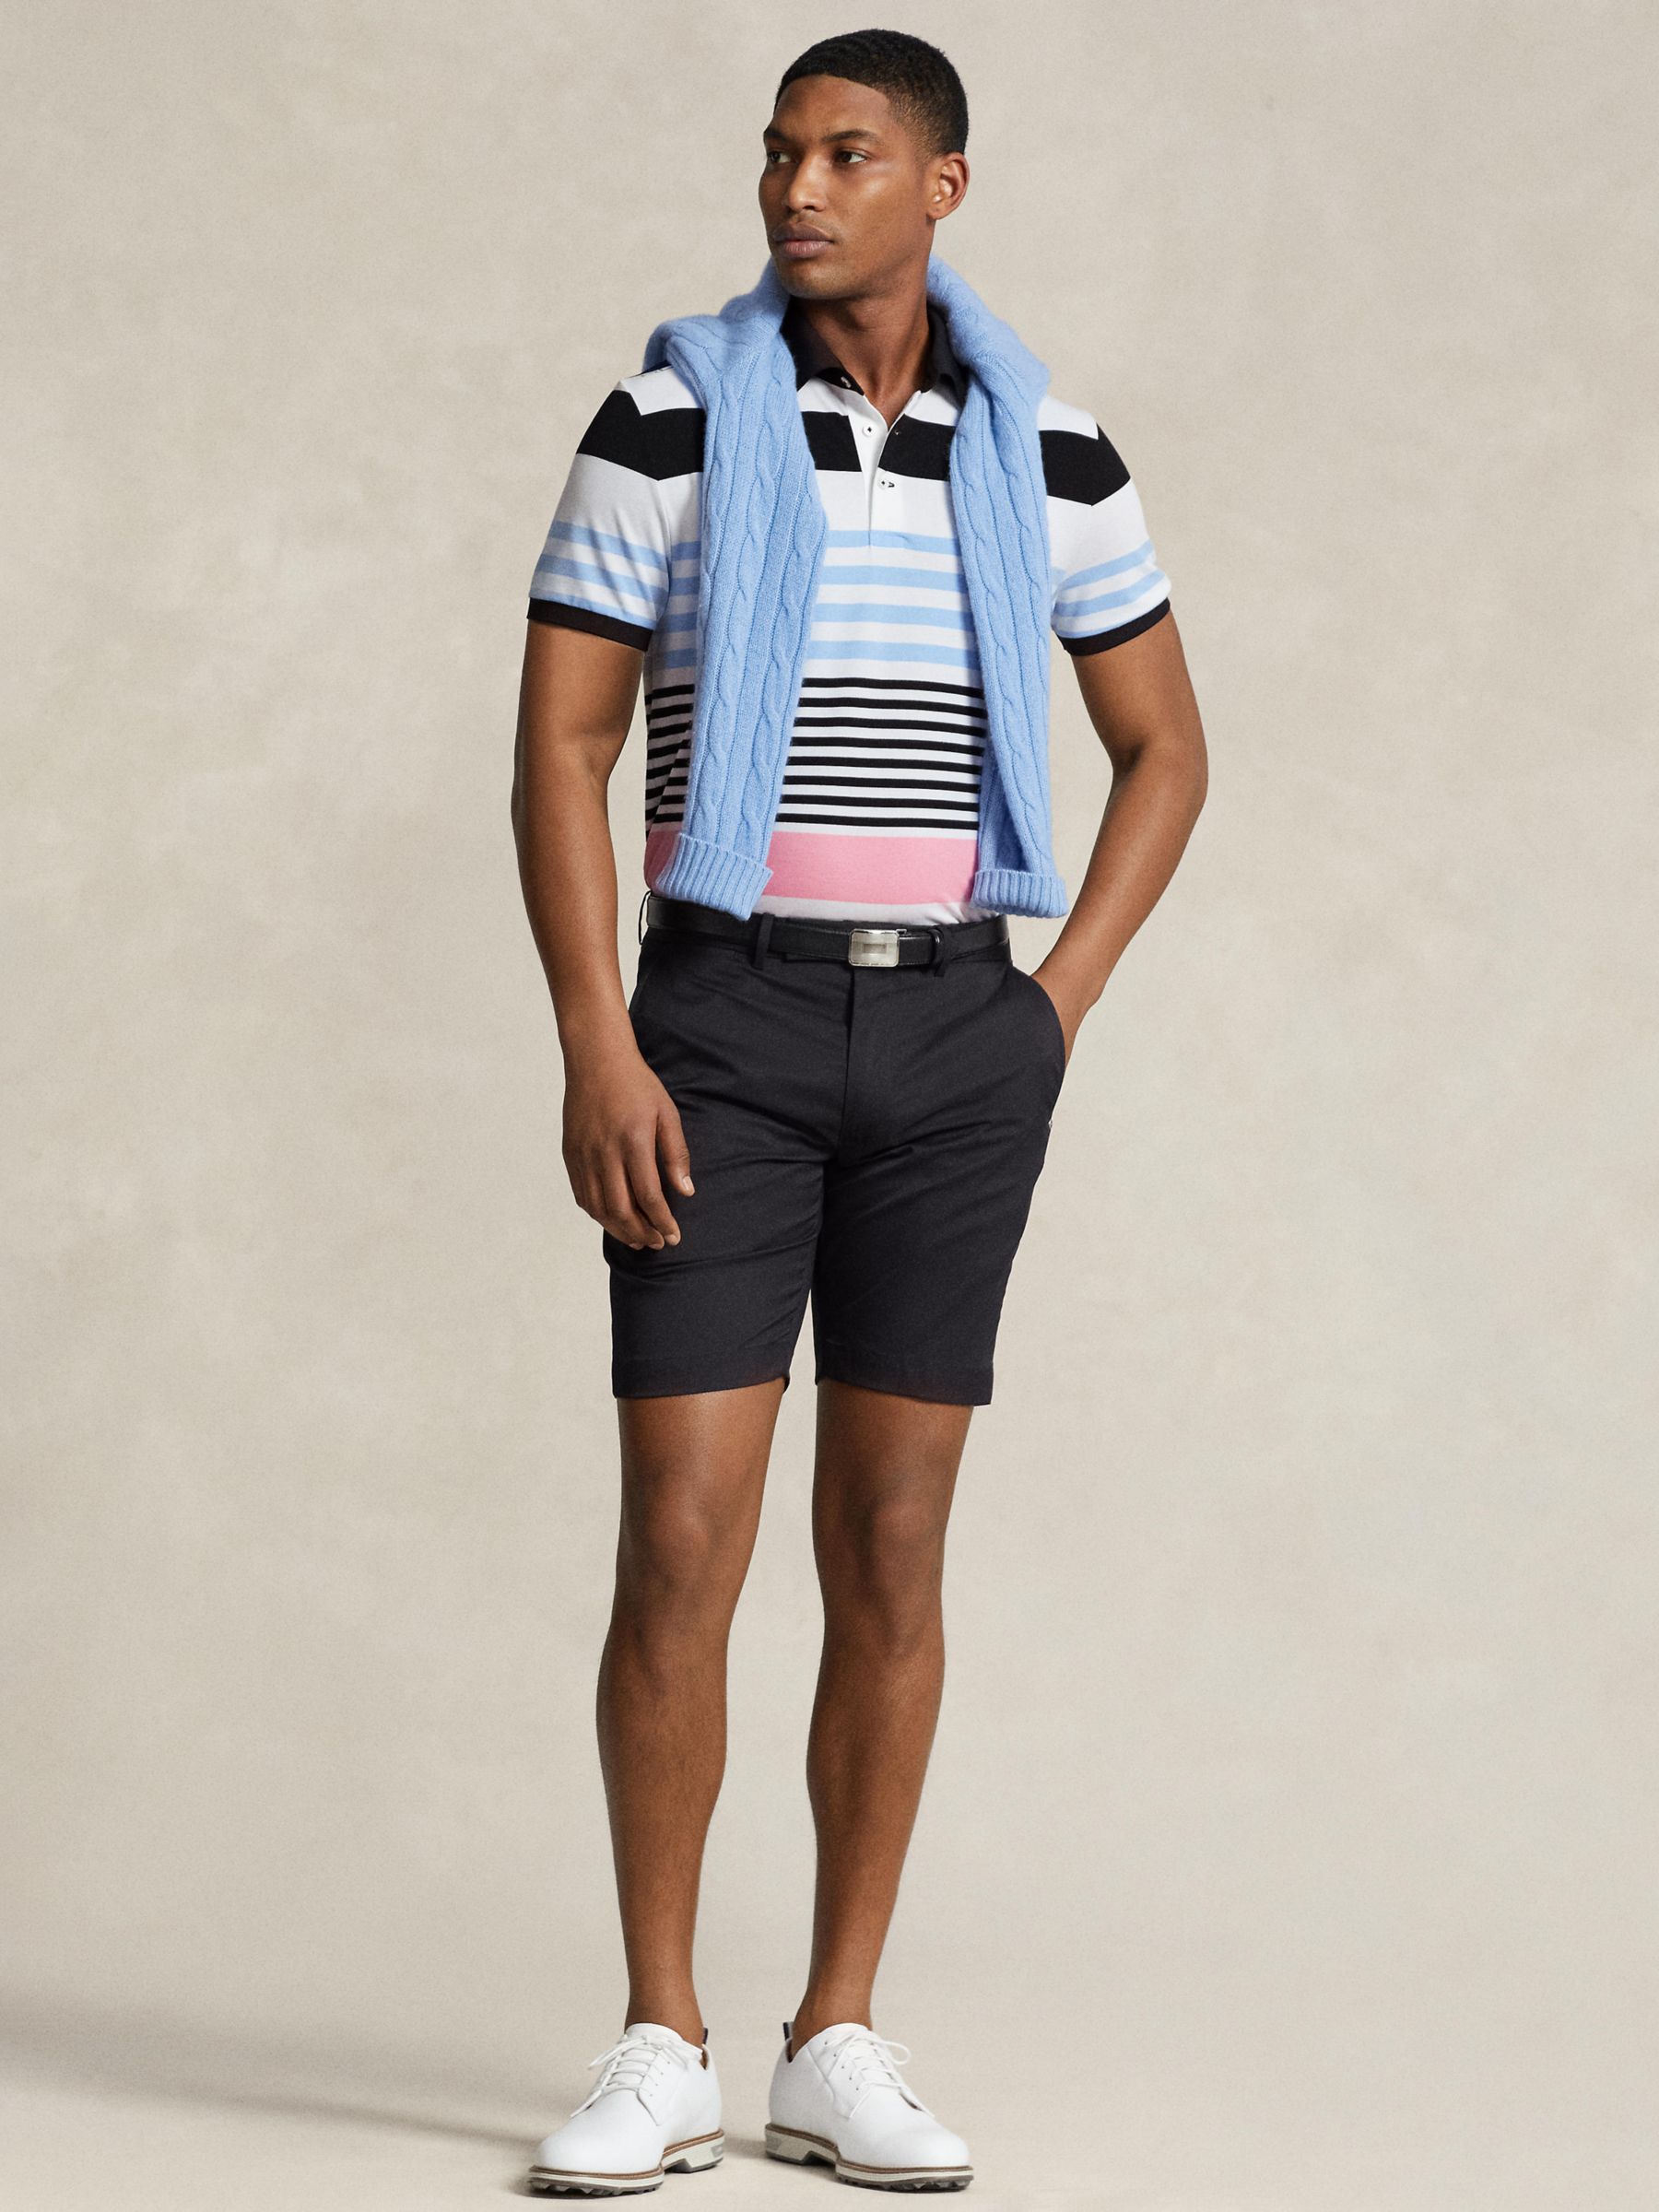 Buy Polo Golf Ralph Lauren Tailored Fit Performance Stripe Polo Shirt, Black/Multi Online at johnlewis.com